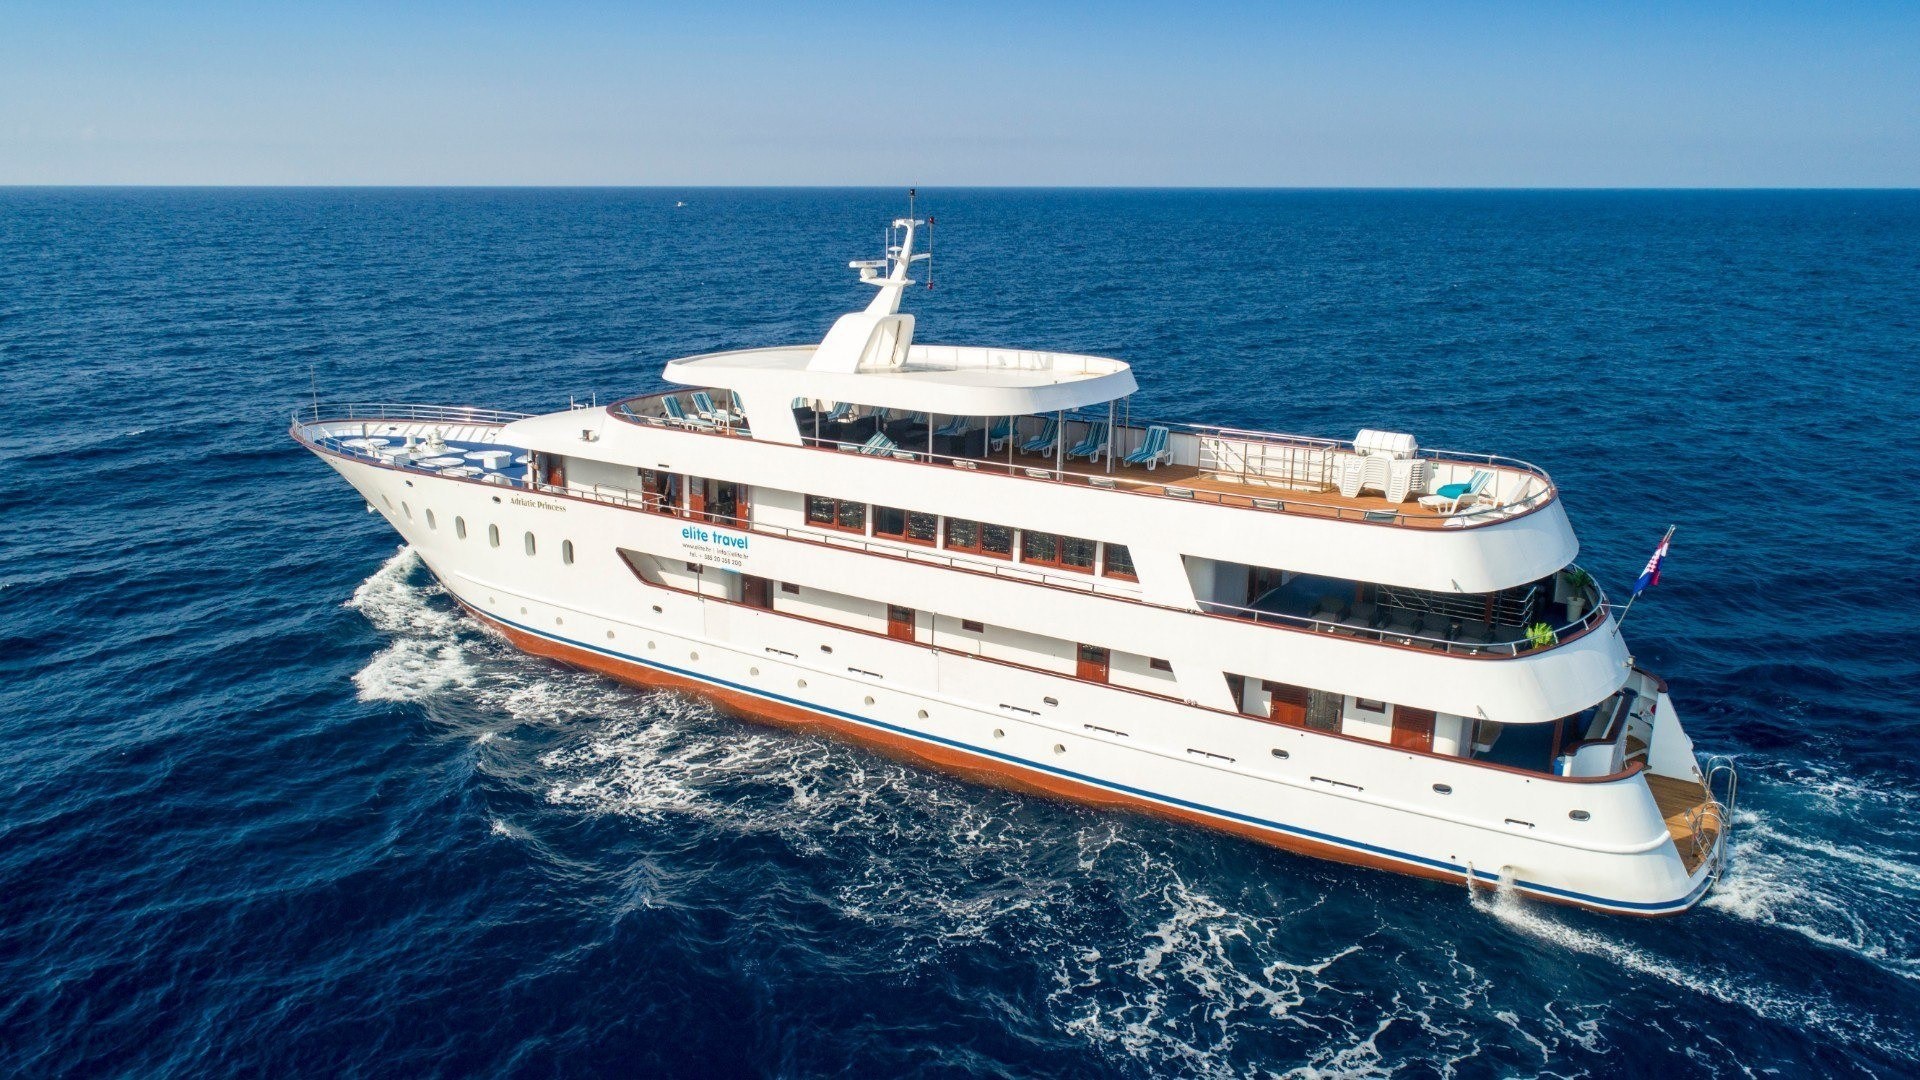 cheap cruises adriatic sea